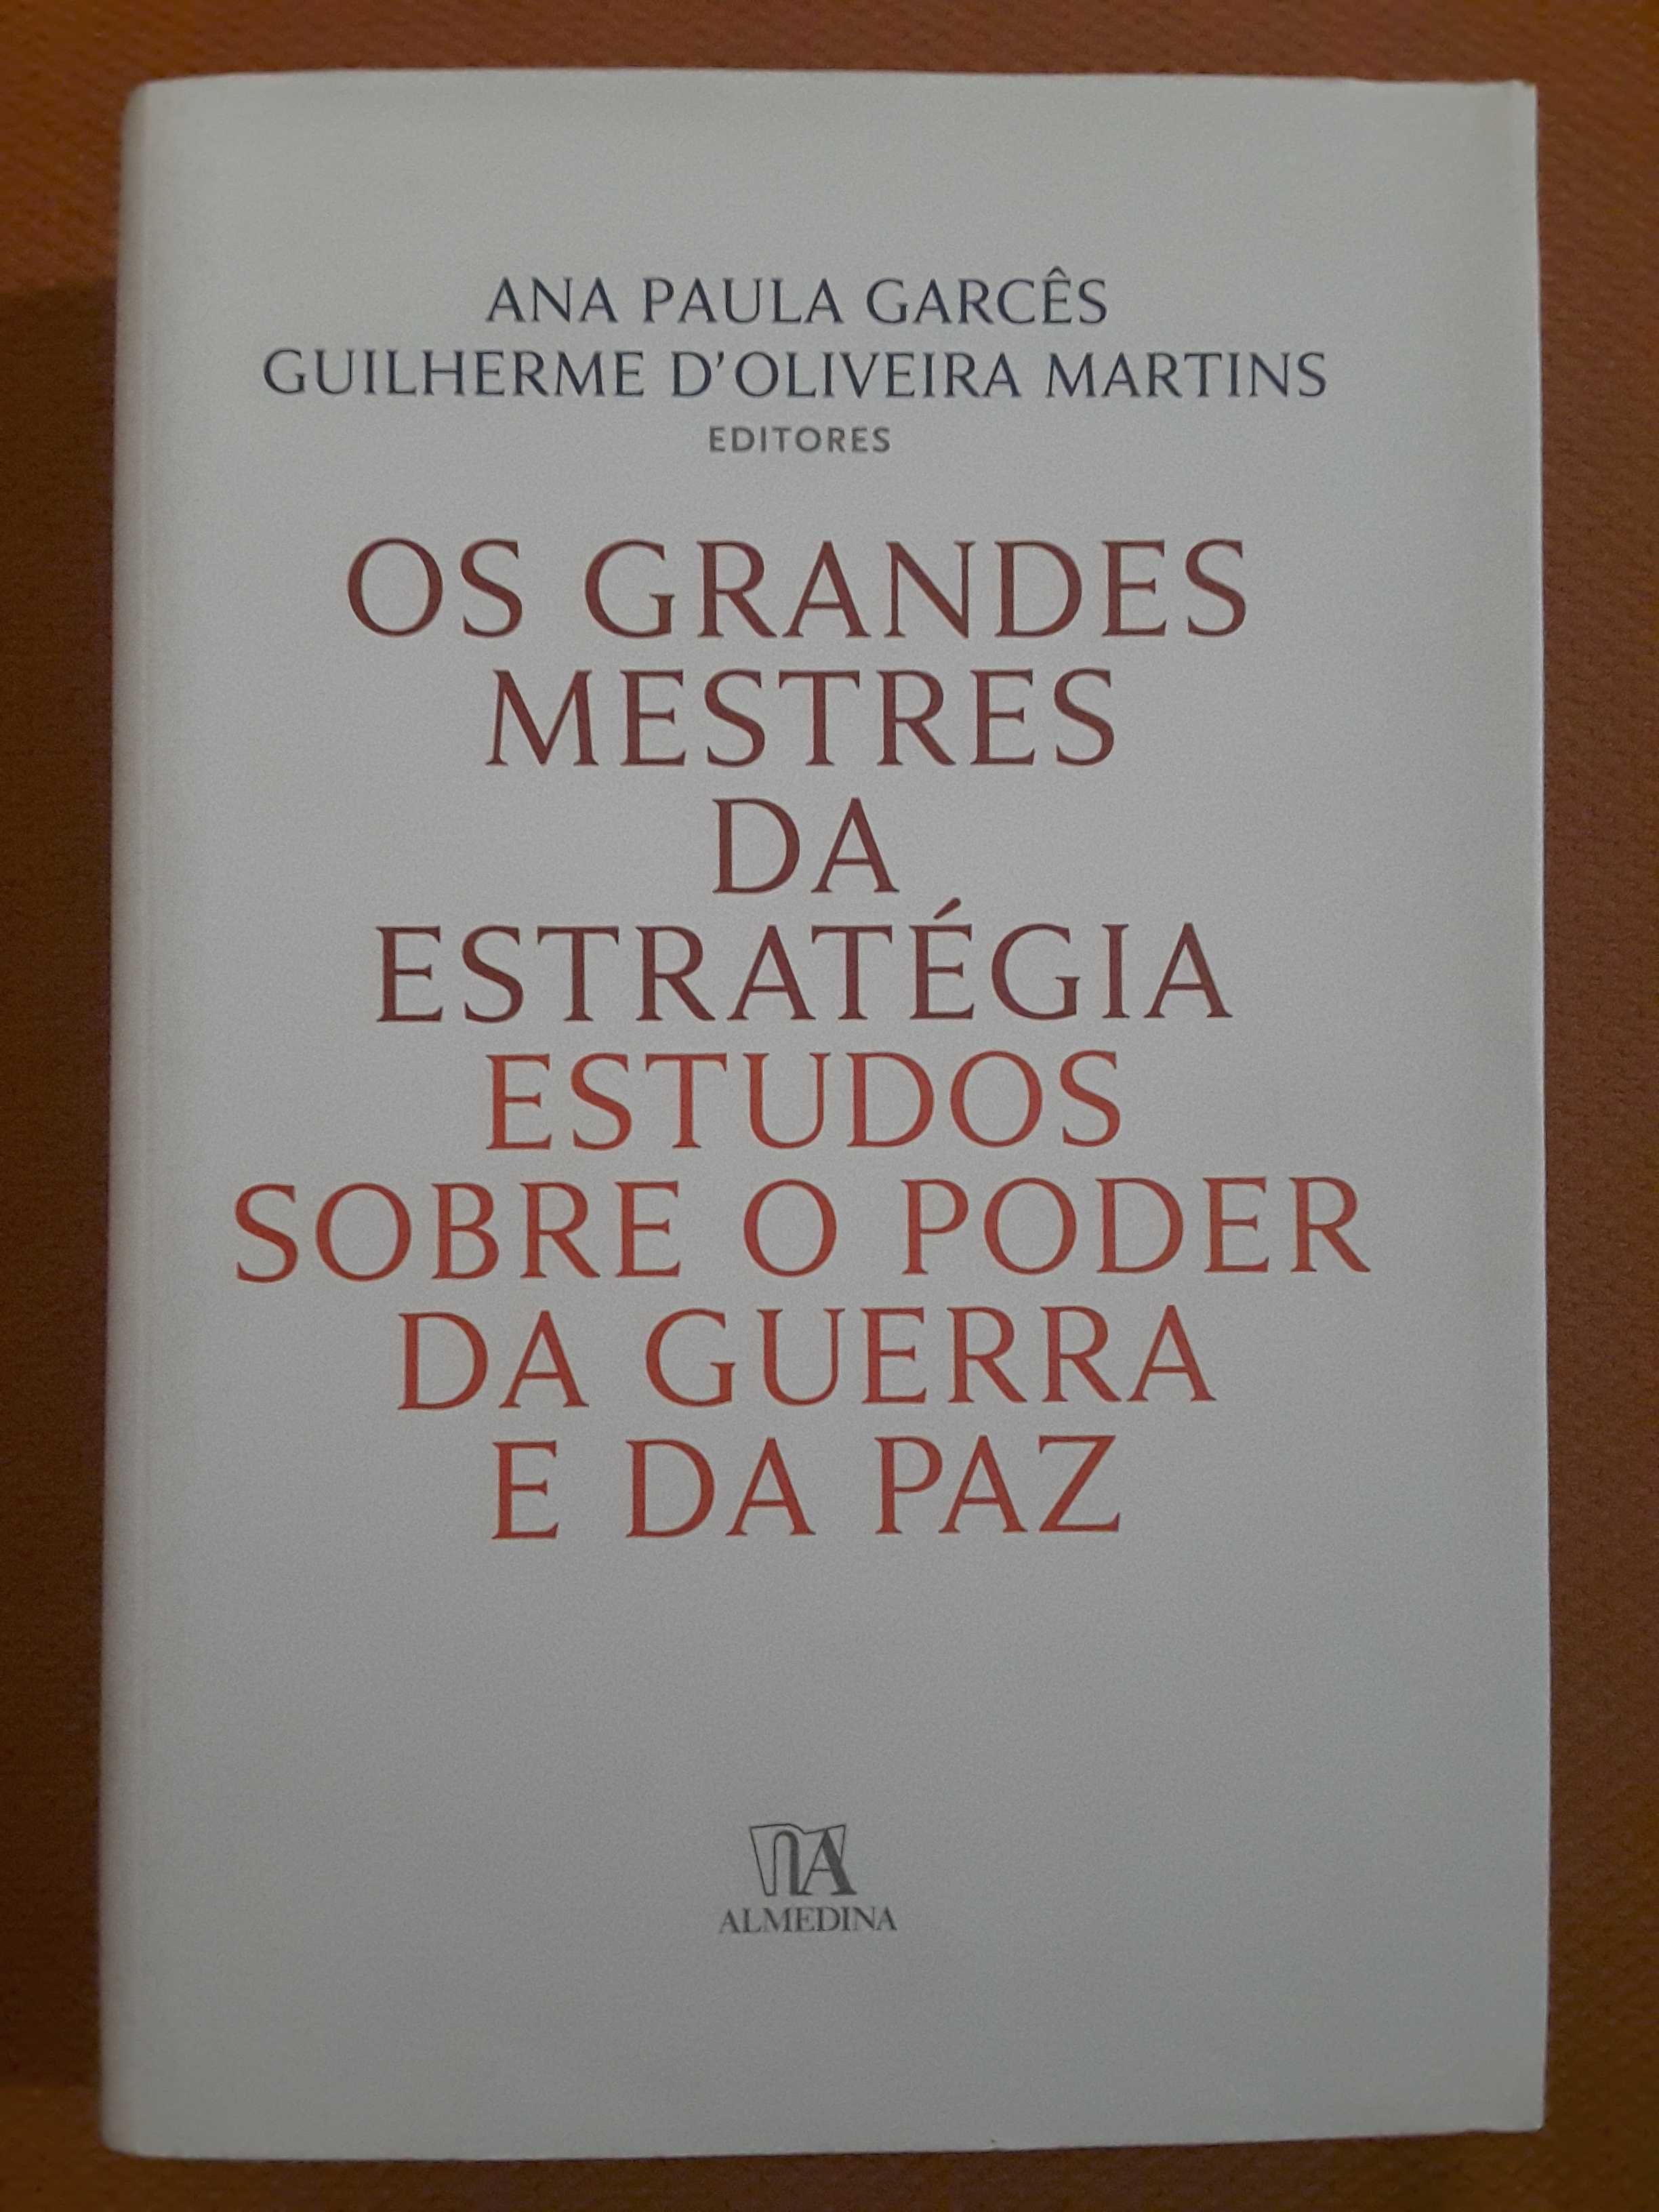 Pressfield - Livros - Revistas - OLX Portugal